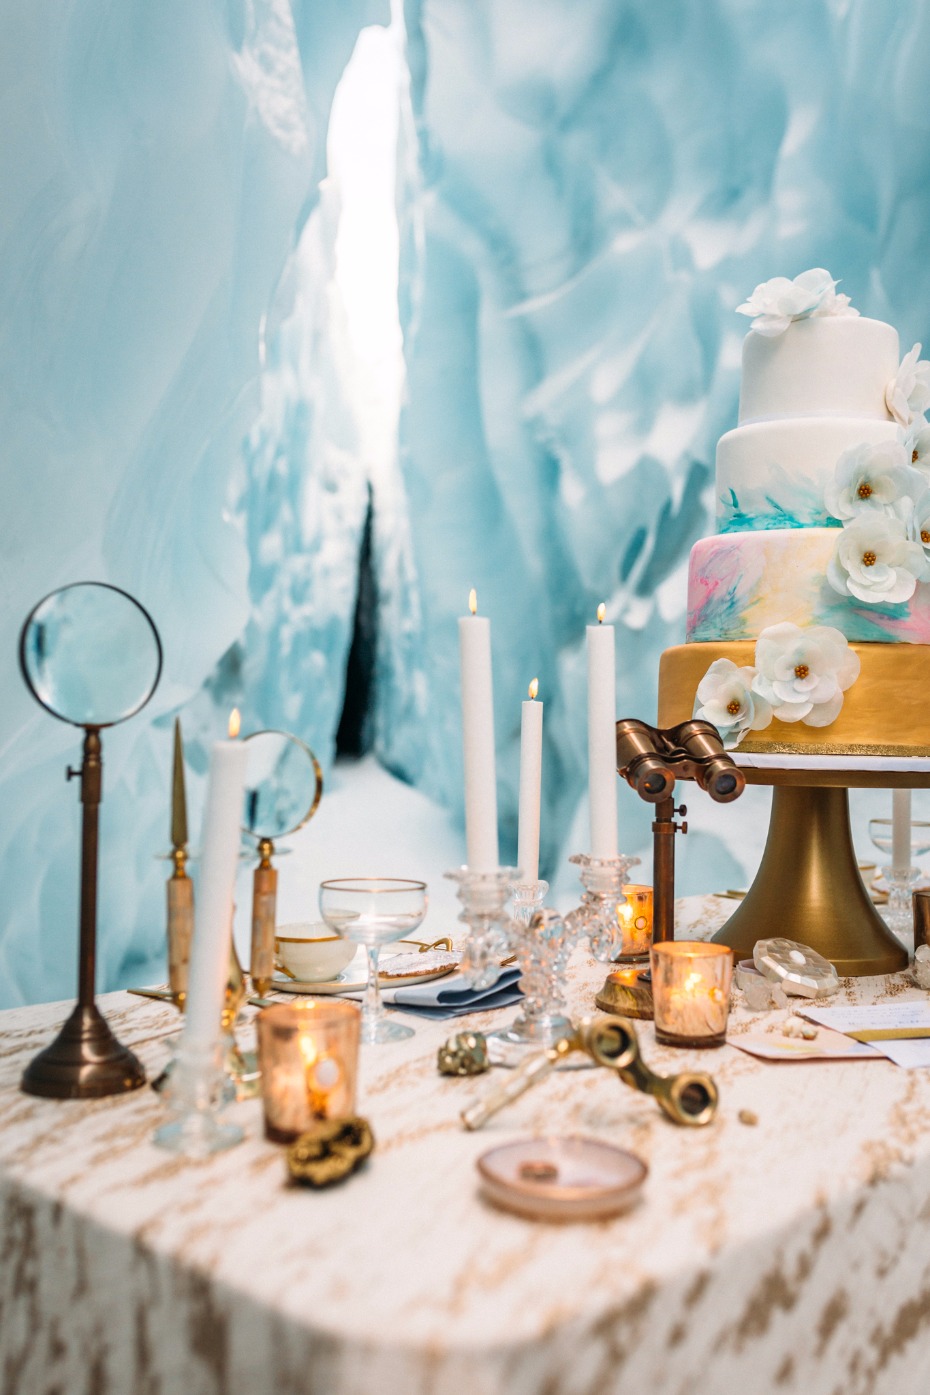 wedding cake table with vintage wedding decor